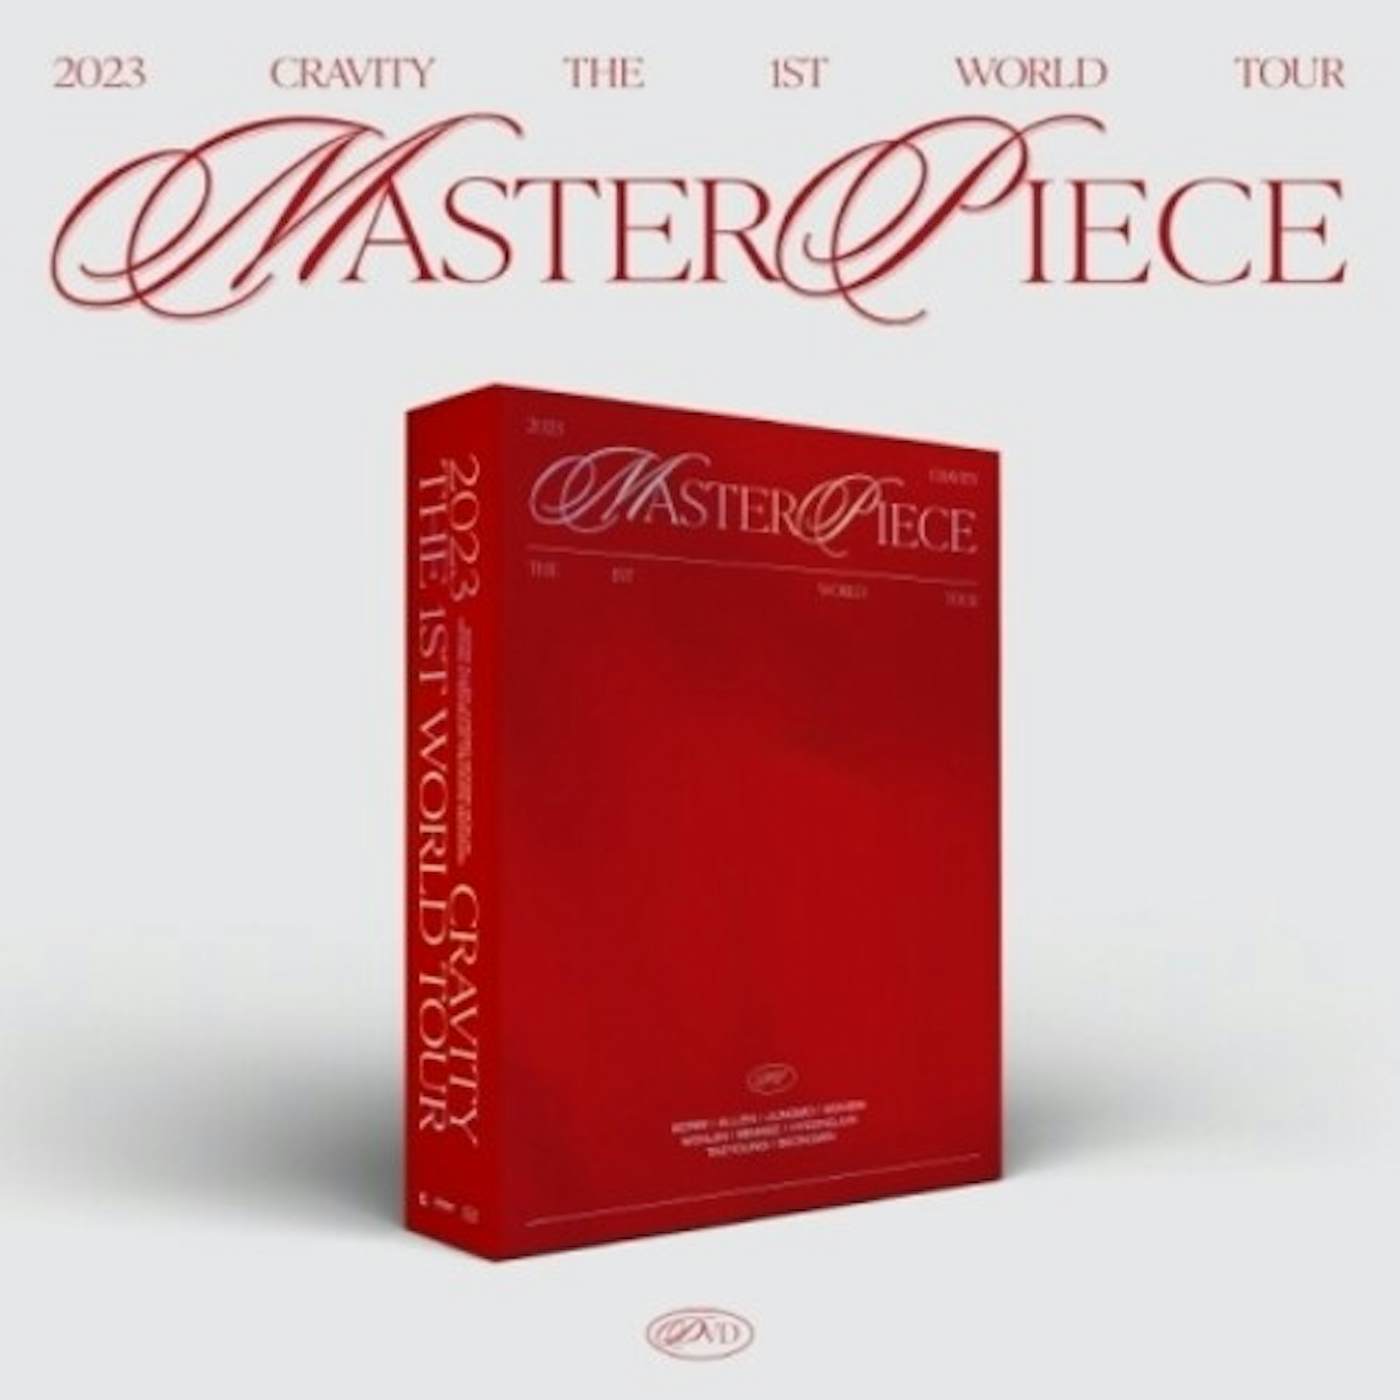 2023 CRAVITY THE 1ST WORLD TOUR - MASTERPIECE DVD